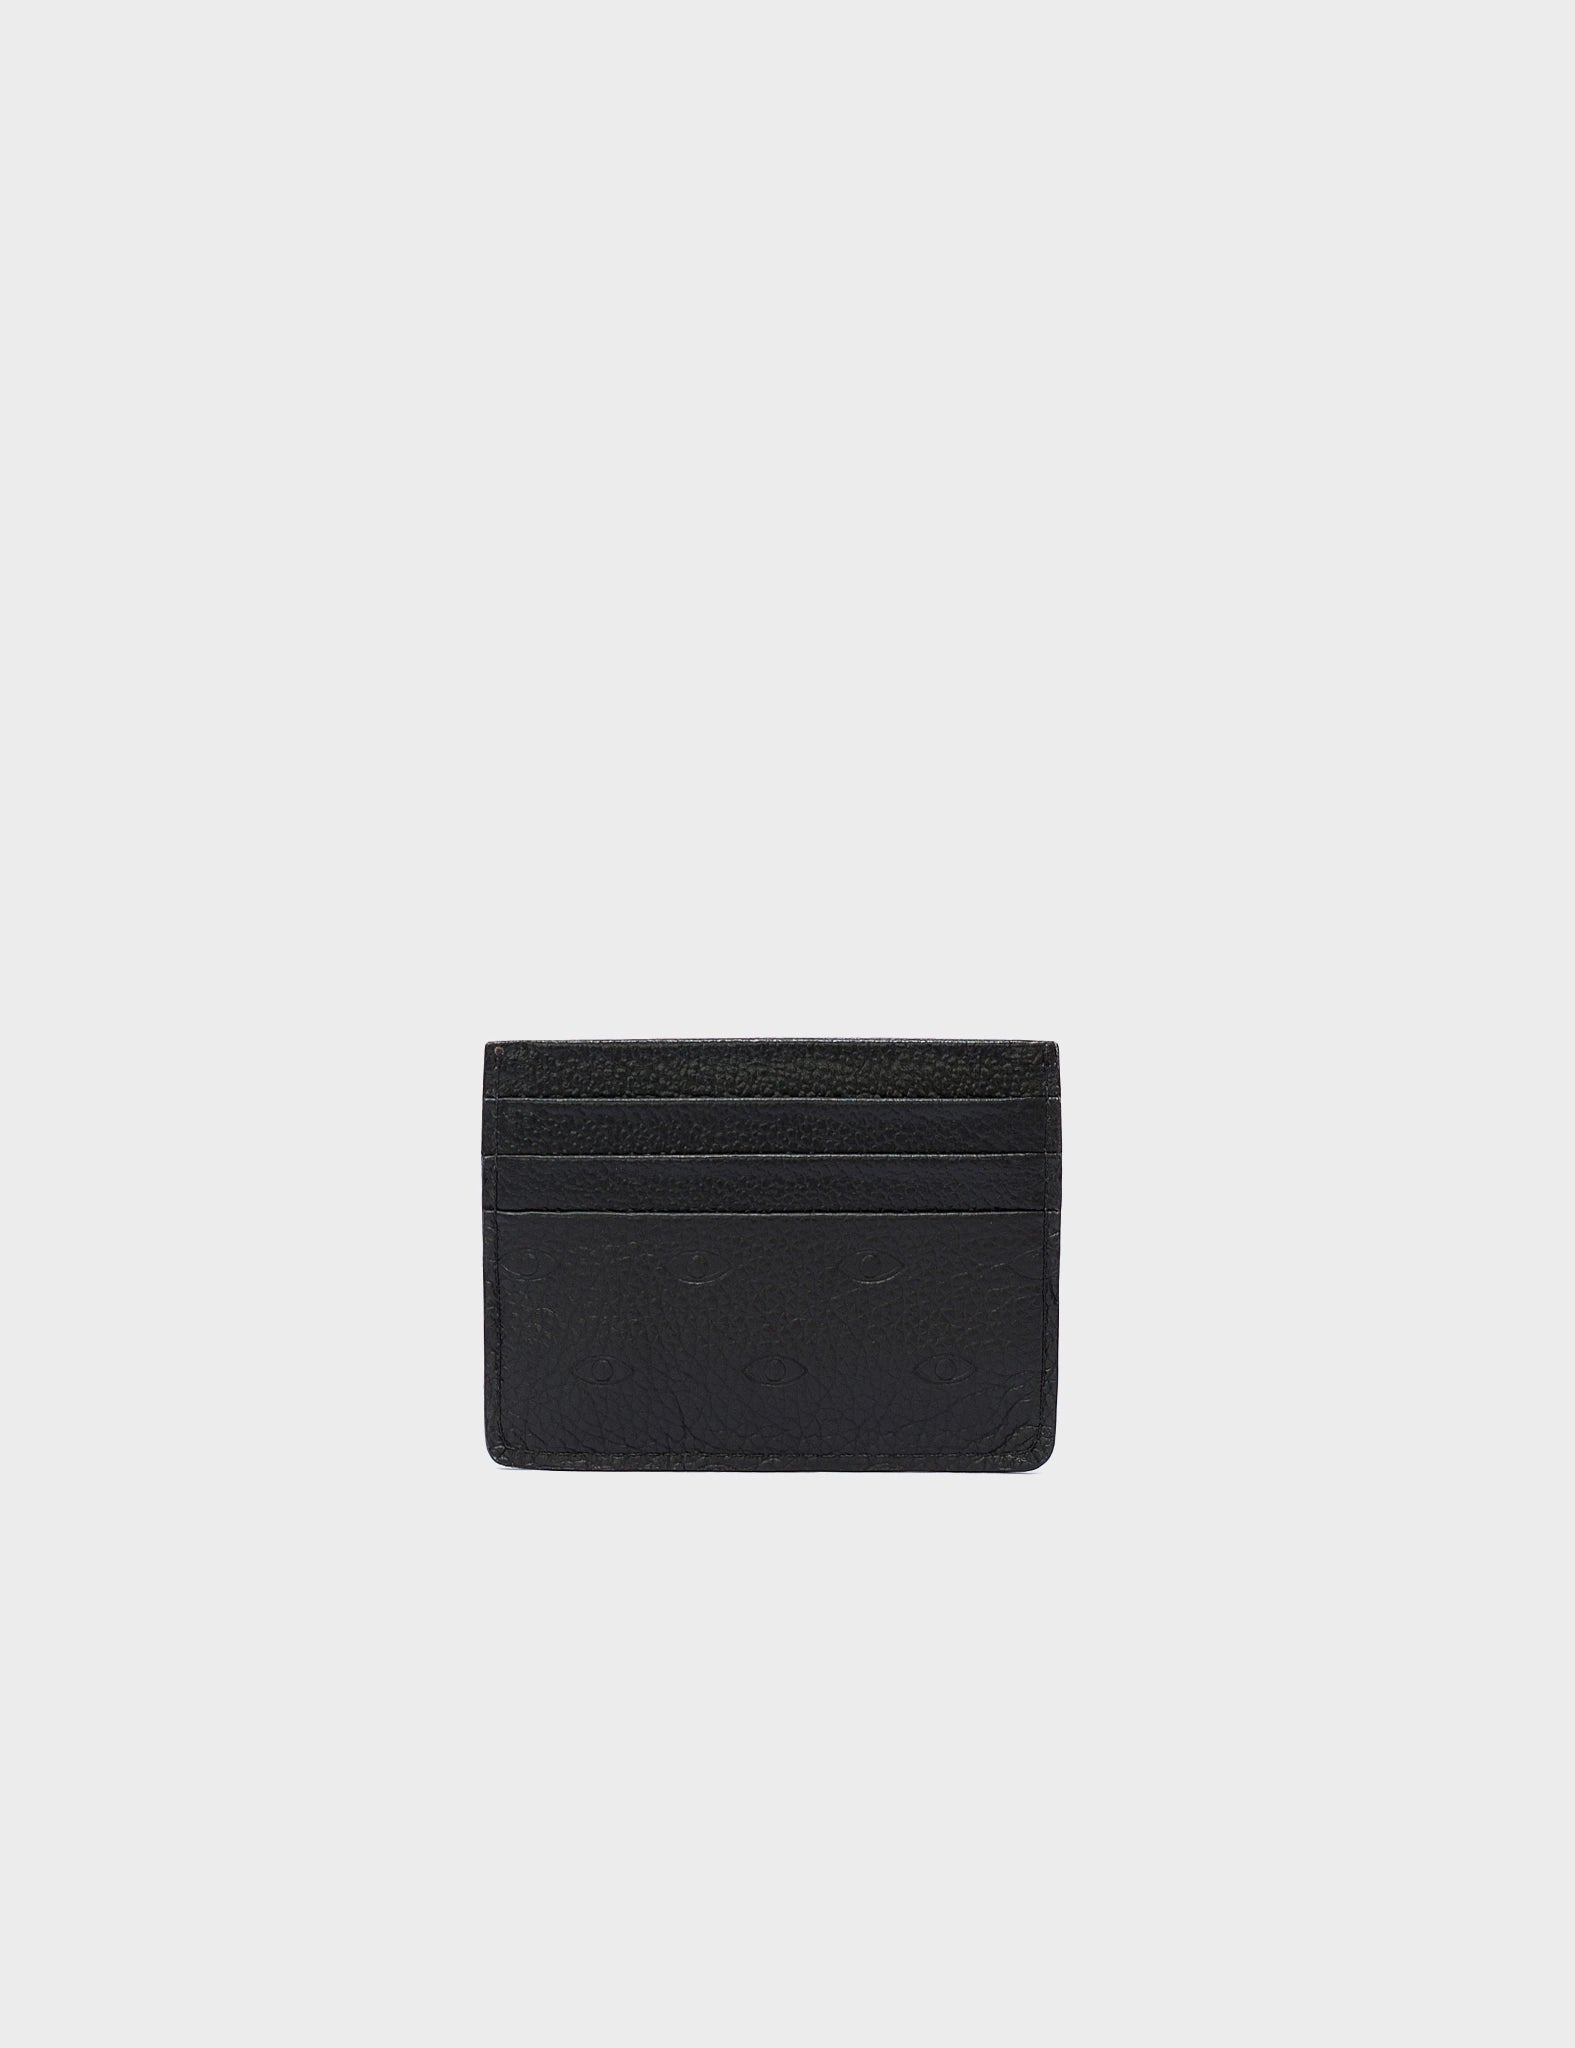 Filium Wallet Black Leather Cardholder - Eyes Pattern Debossed - Back